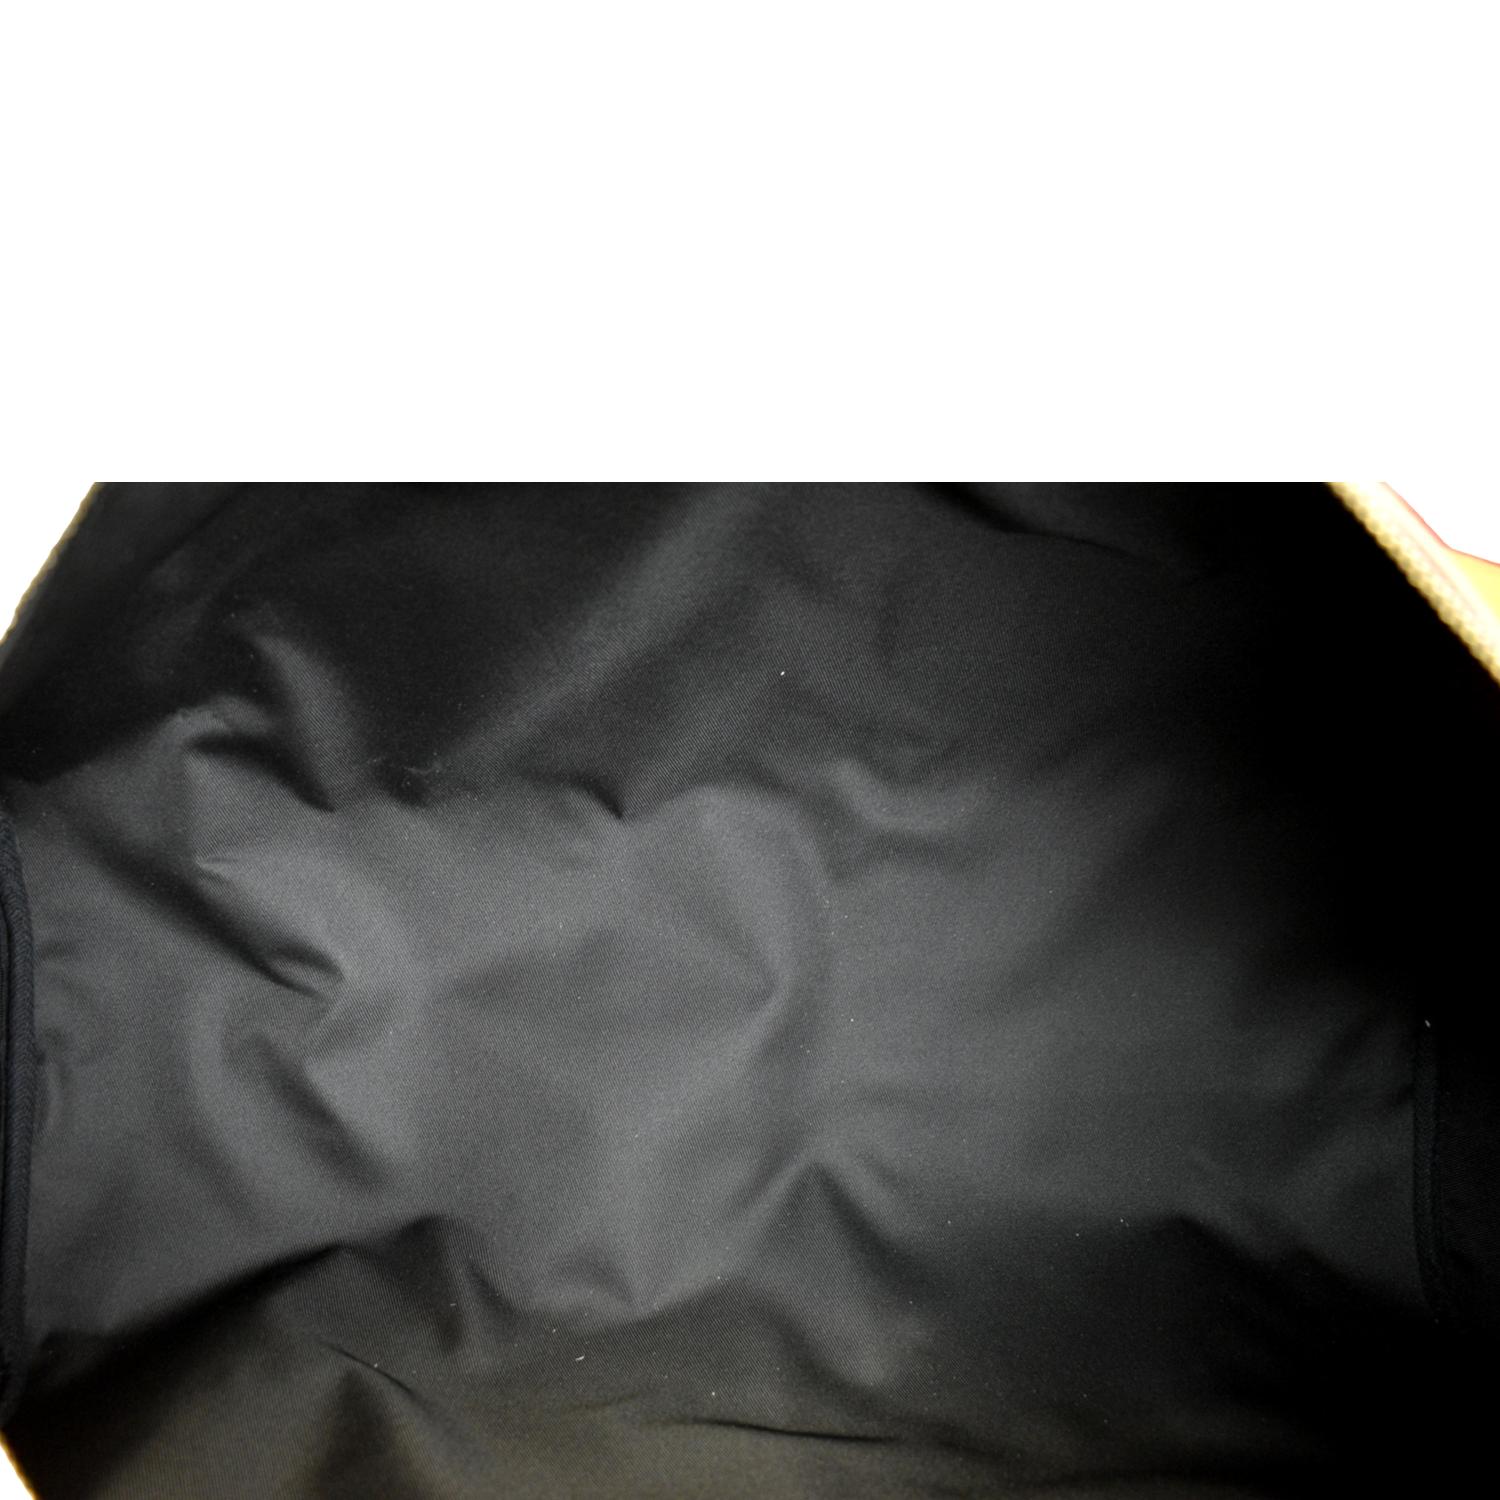 LOUIS VUITTON Keepall 50 Bandouliere Monogram Taiga Leather Travel Bag